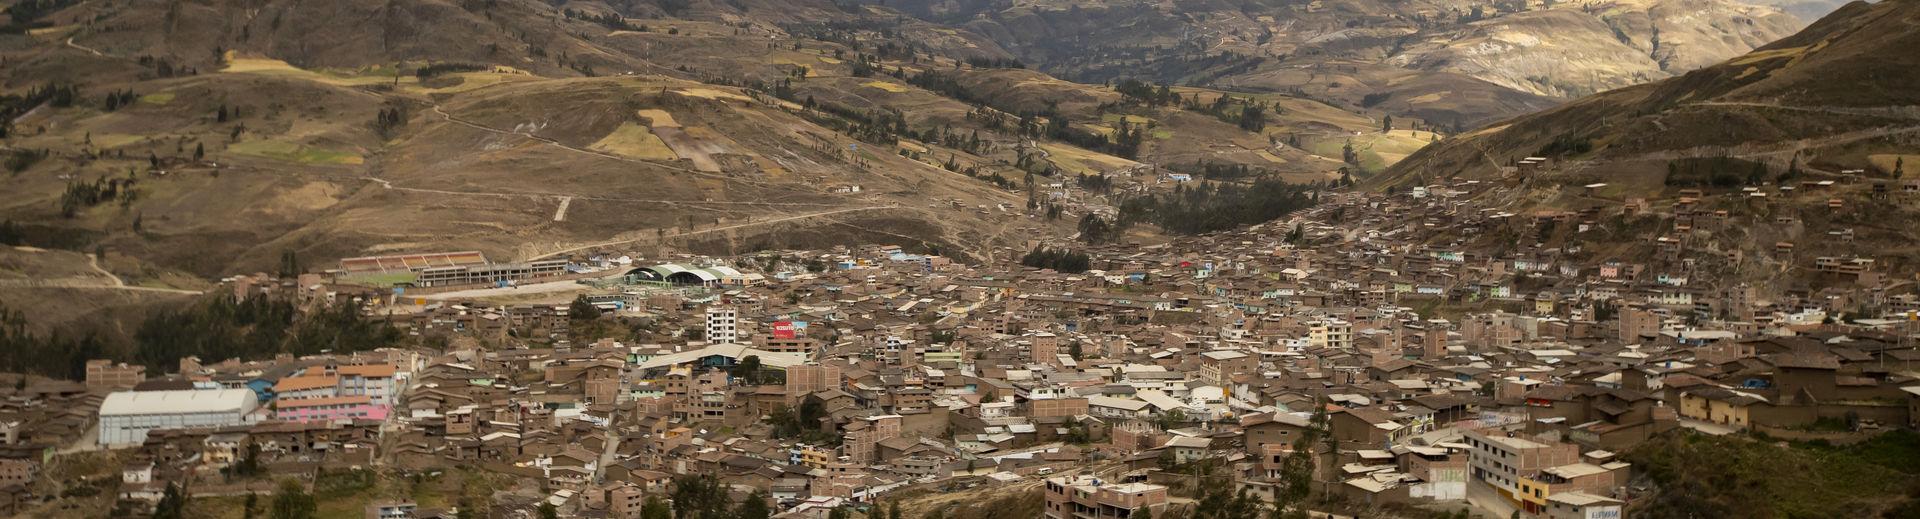 The landscape of a Peruvian city.